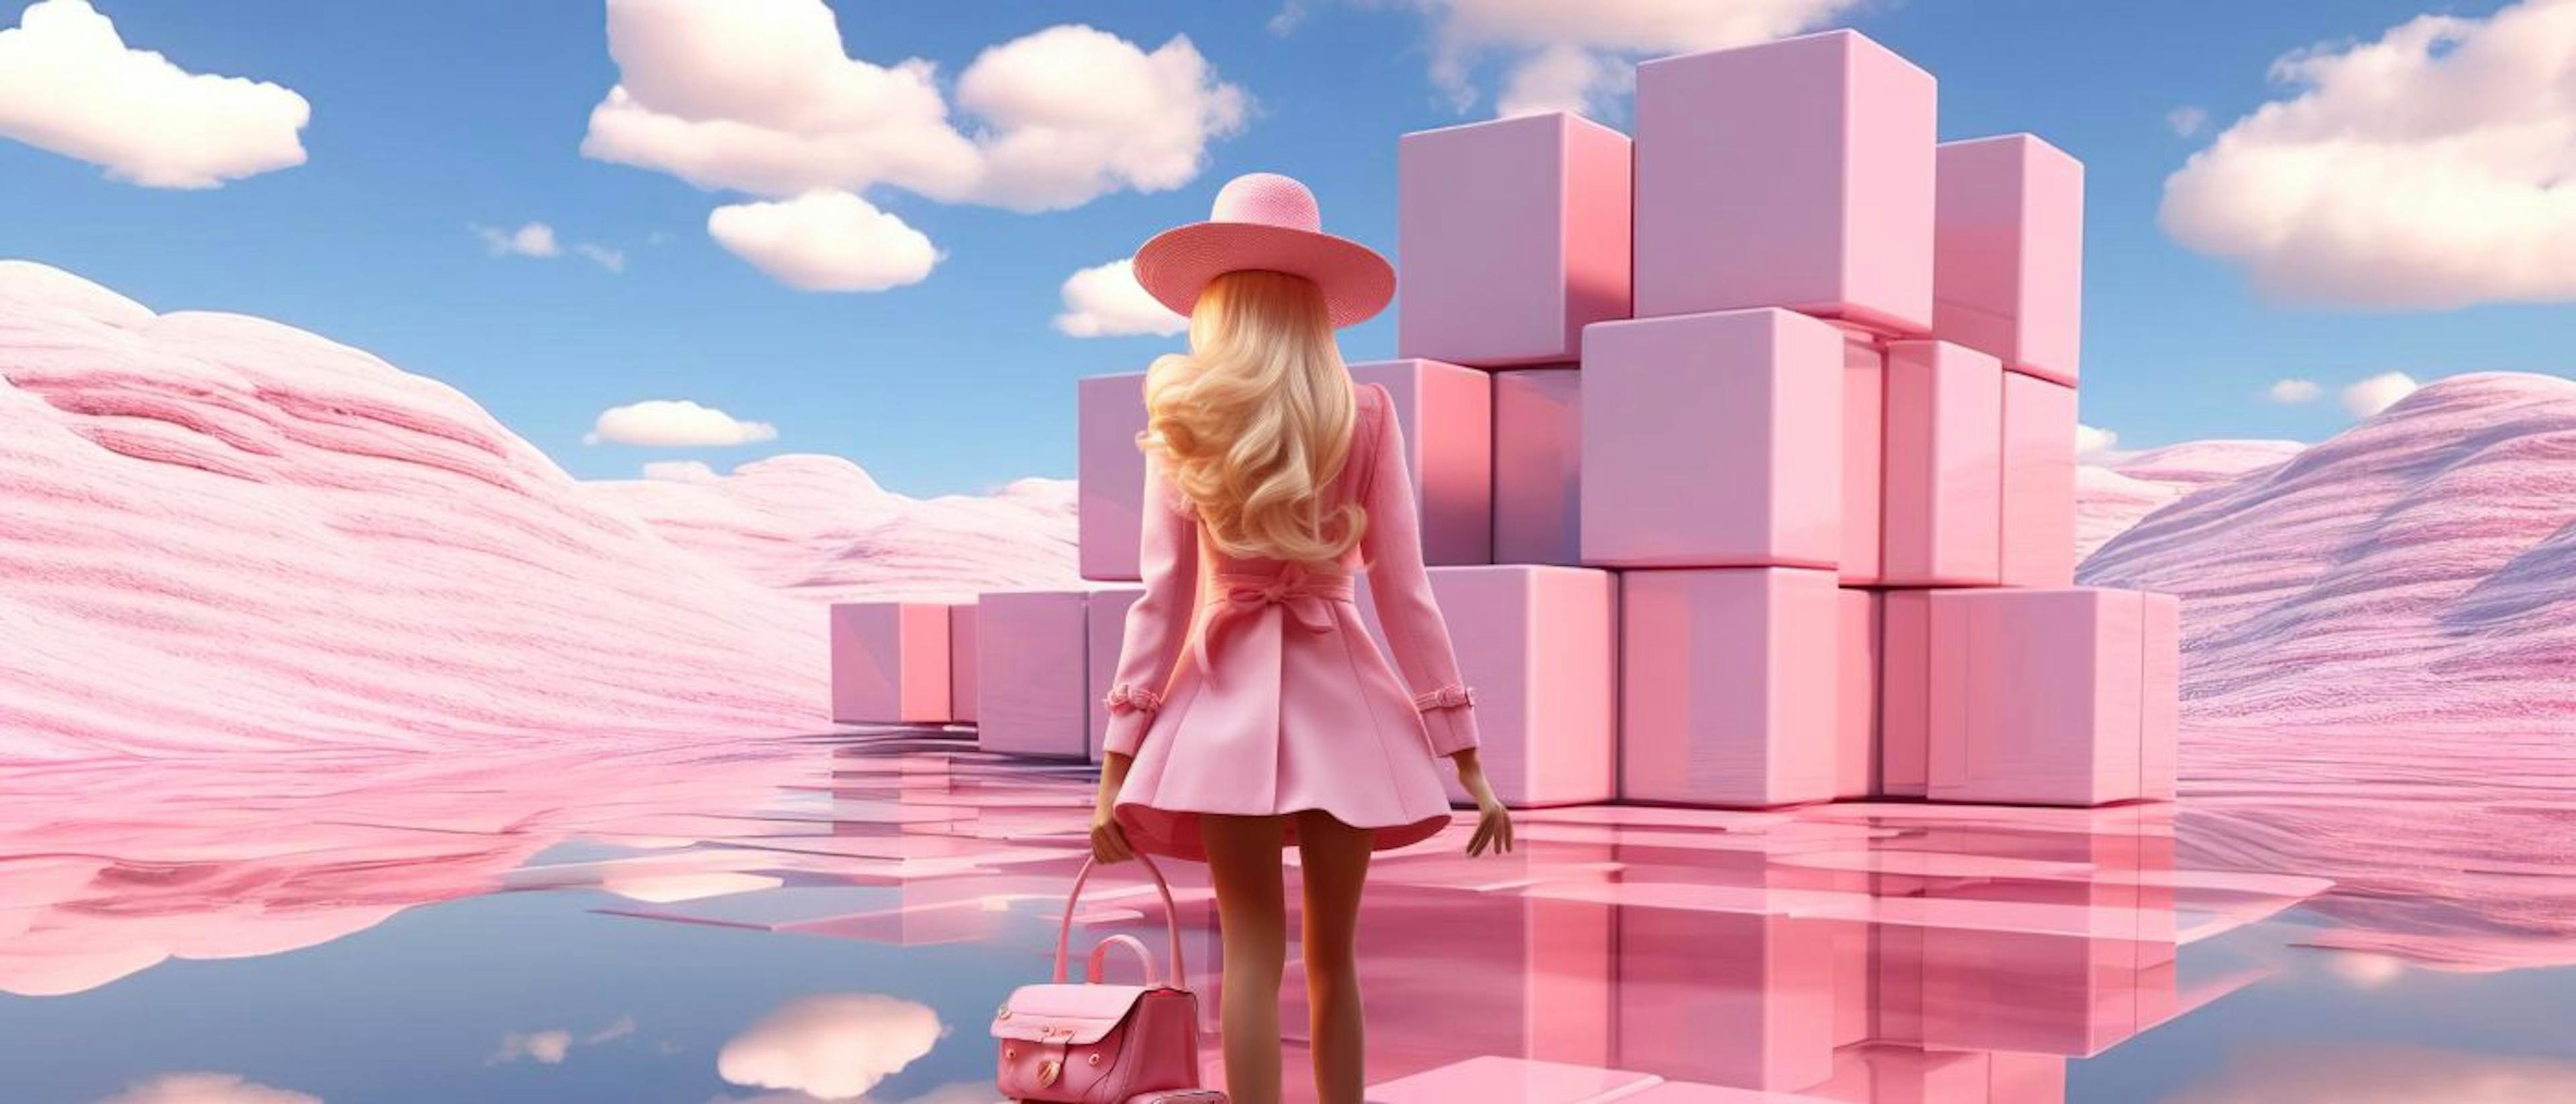 featured image - Barbie e Blockchain: uma dança simbiótica